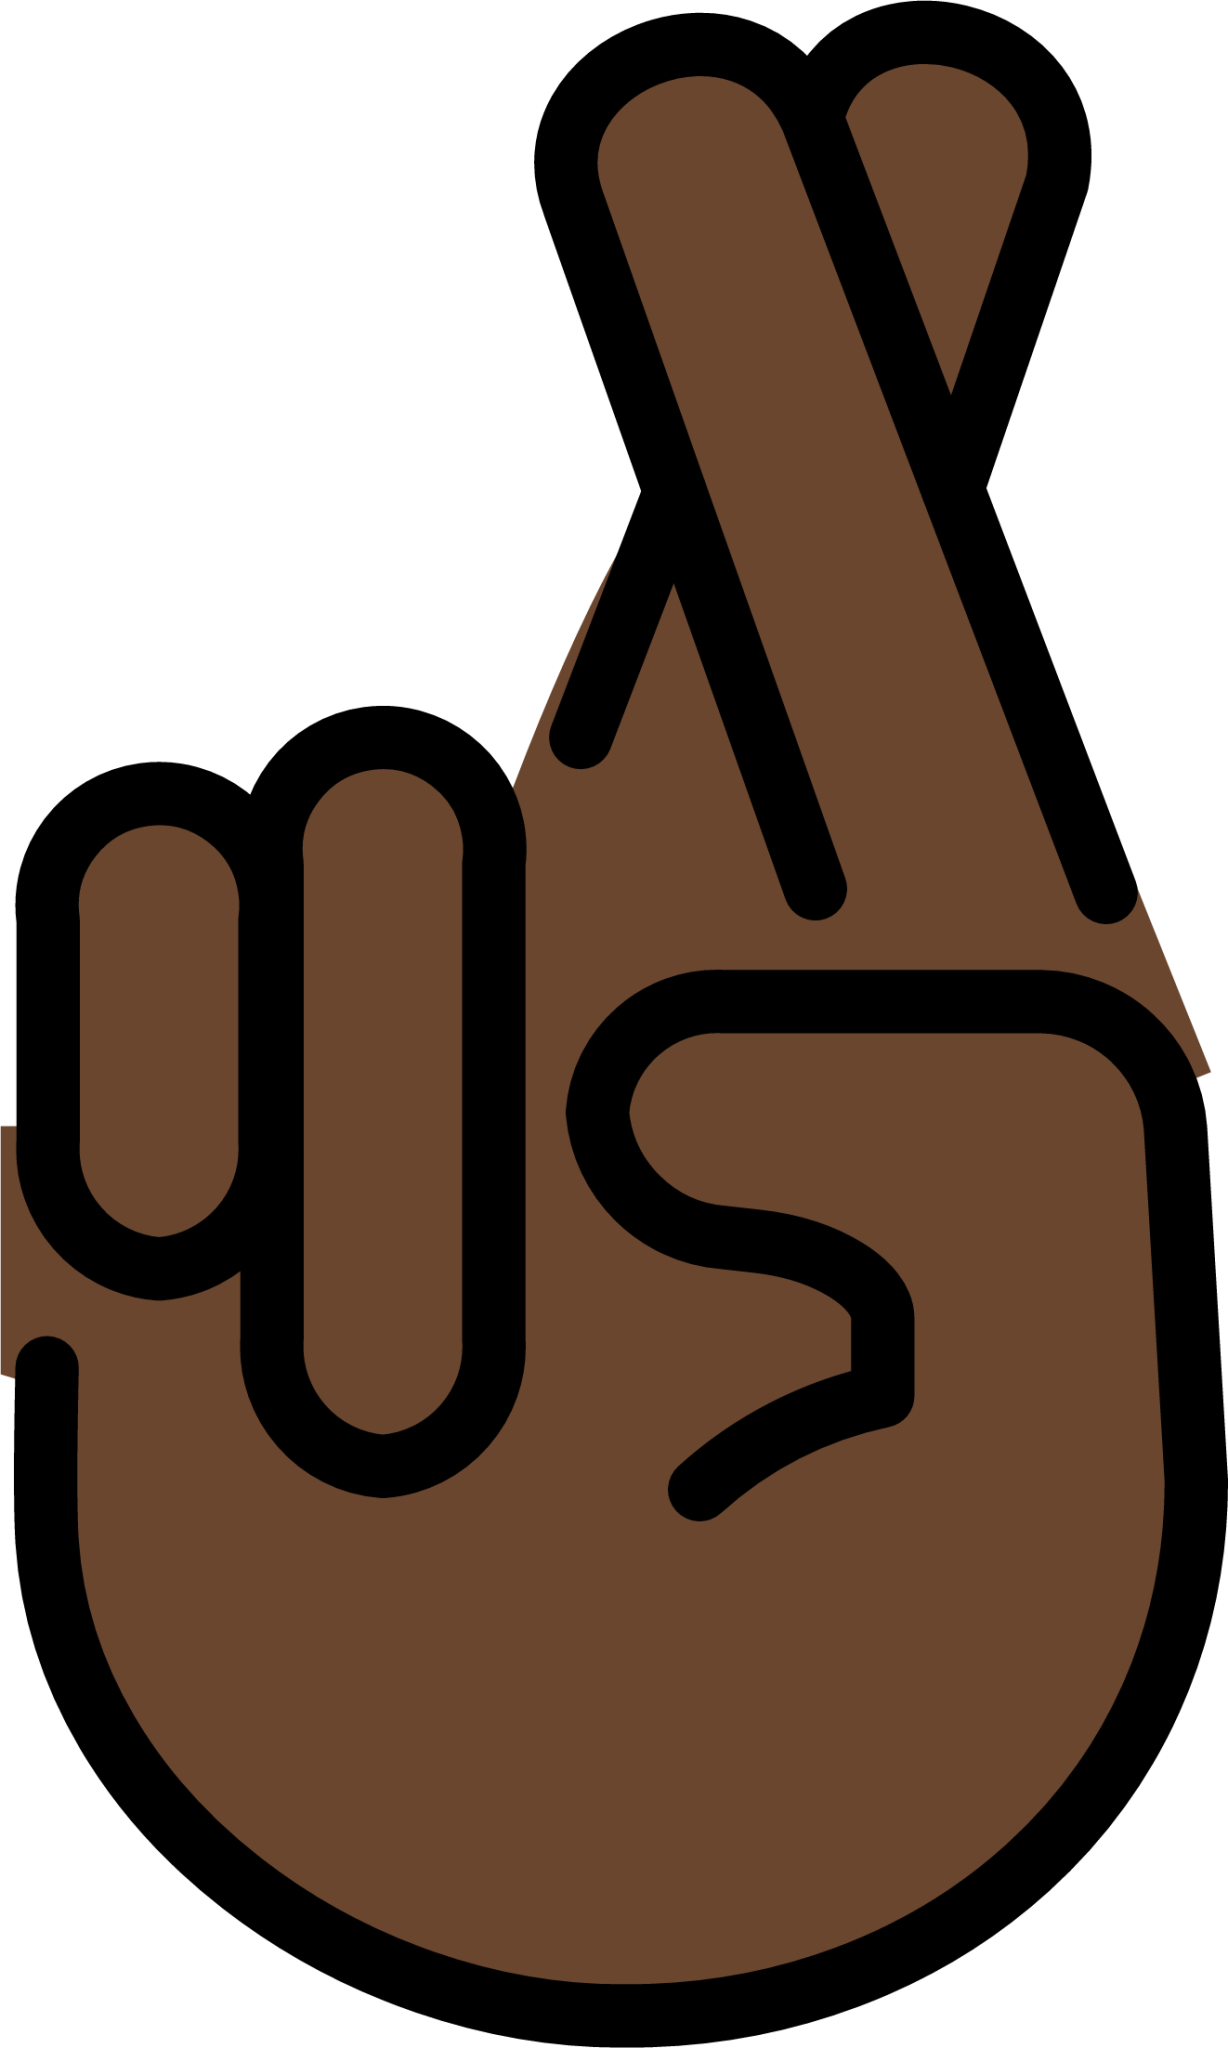 crossed fingers: dark skin tone emoji